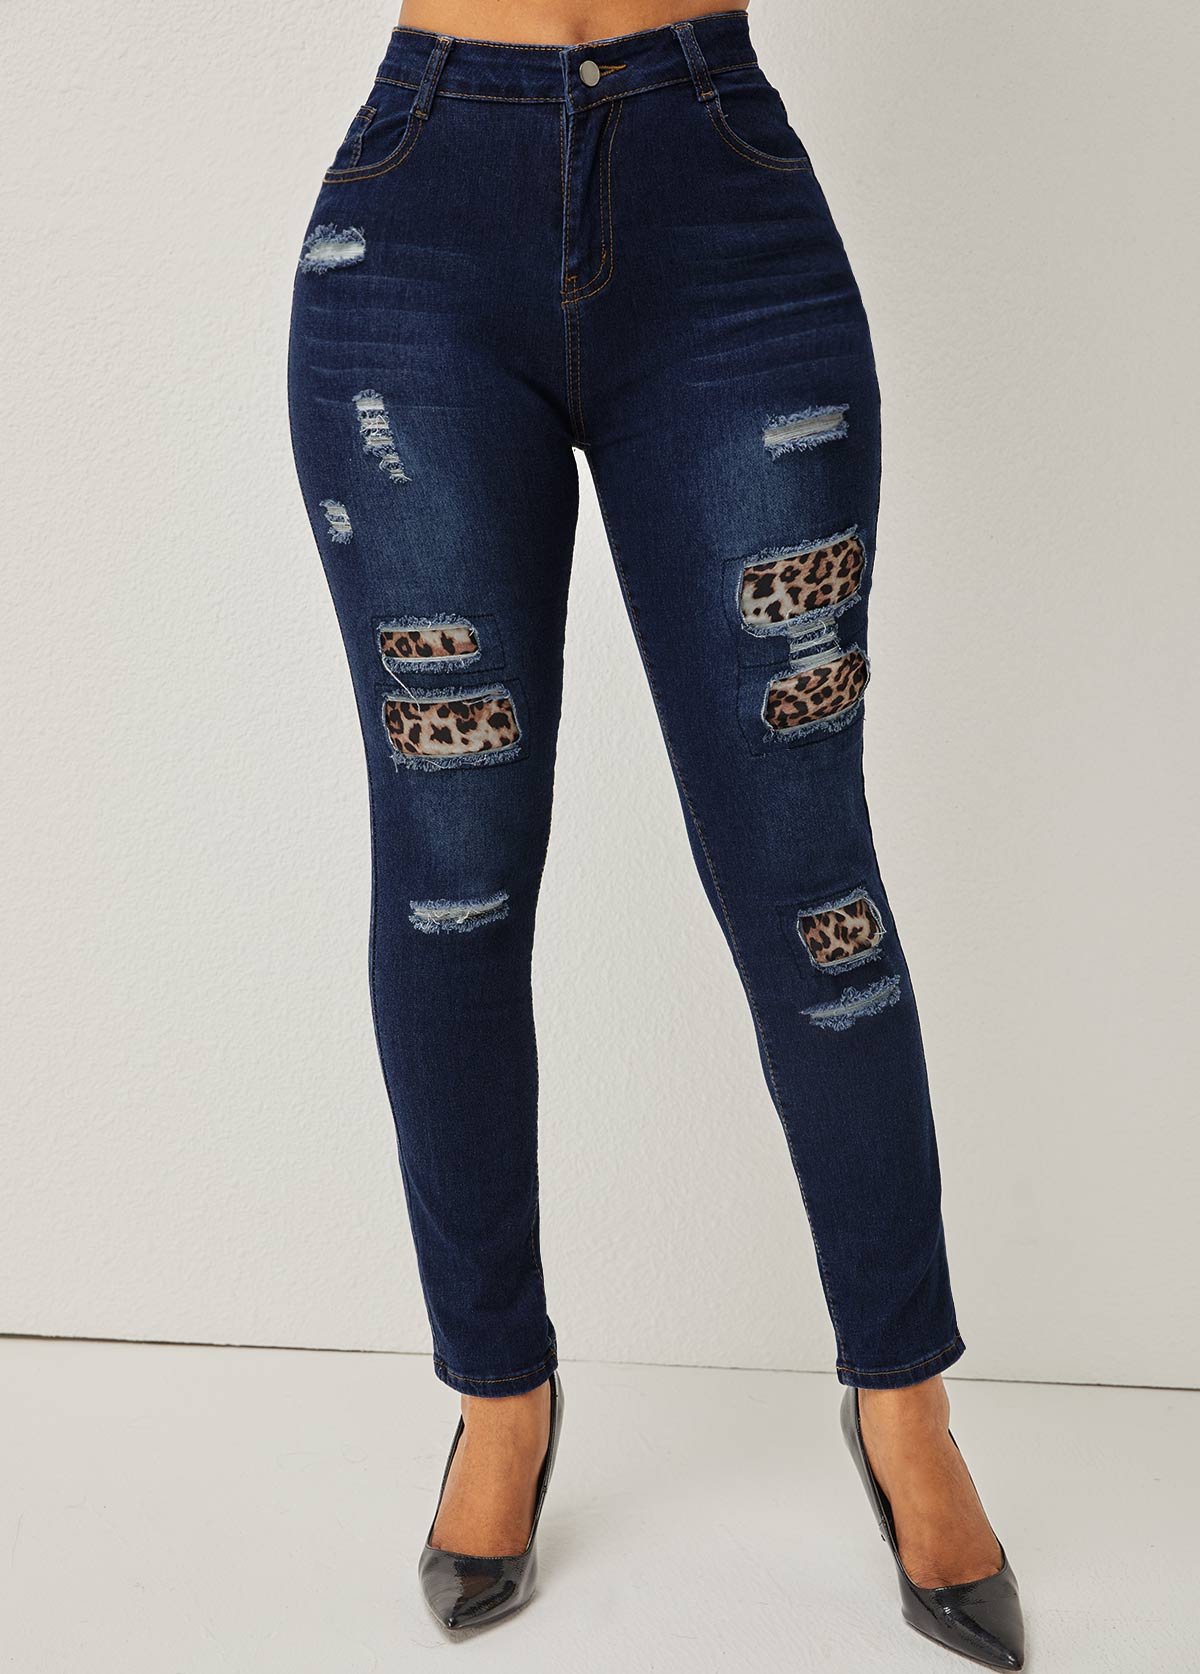 Shredded Leopard High Waist Skinny Jeans